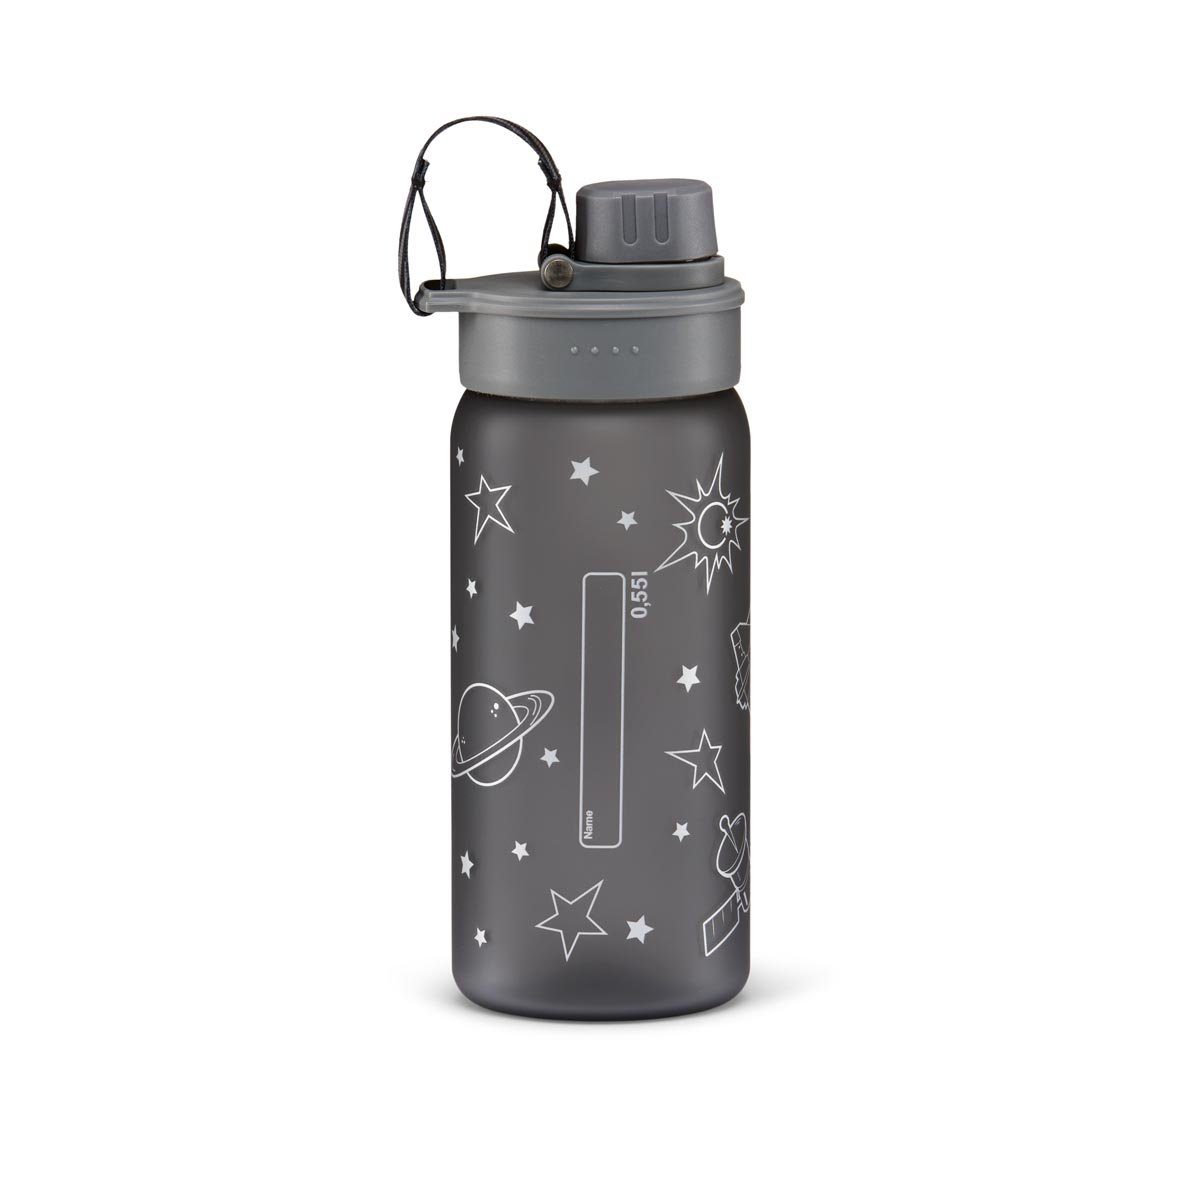 BPA-freiem Tritan Weltall Tritan, ergobag Trinkflasche